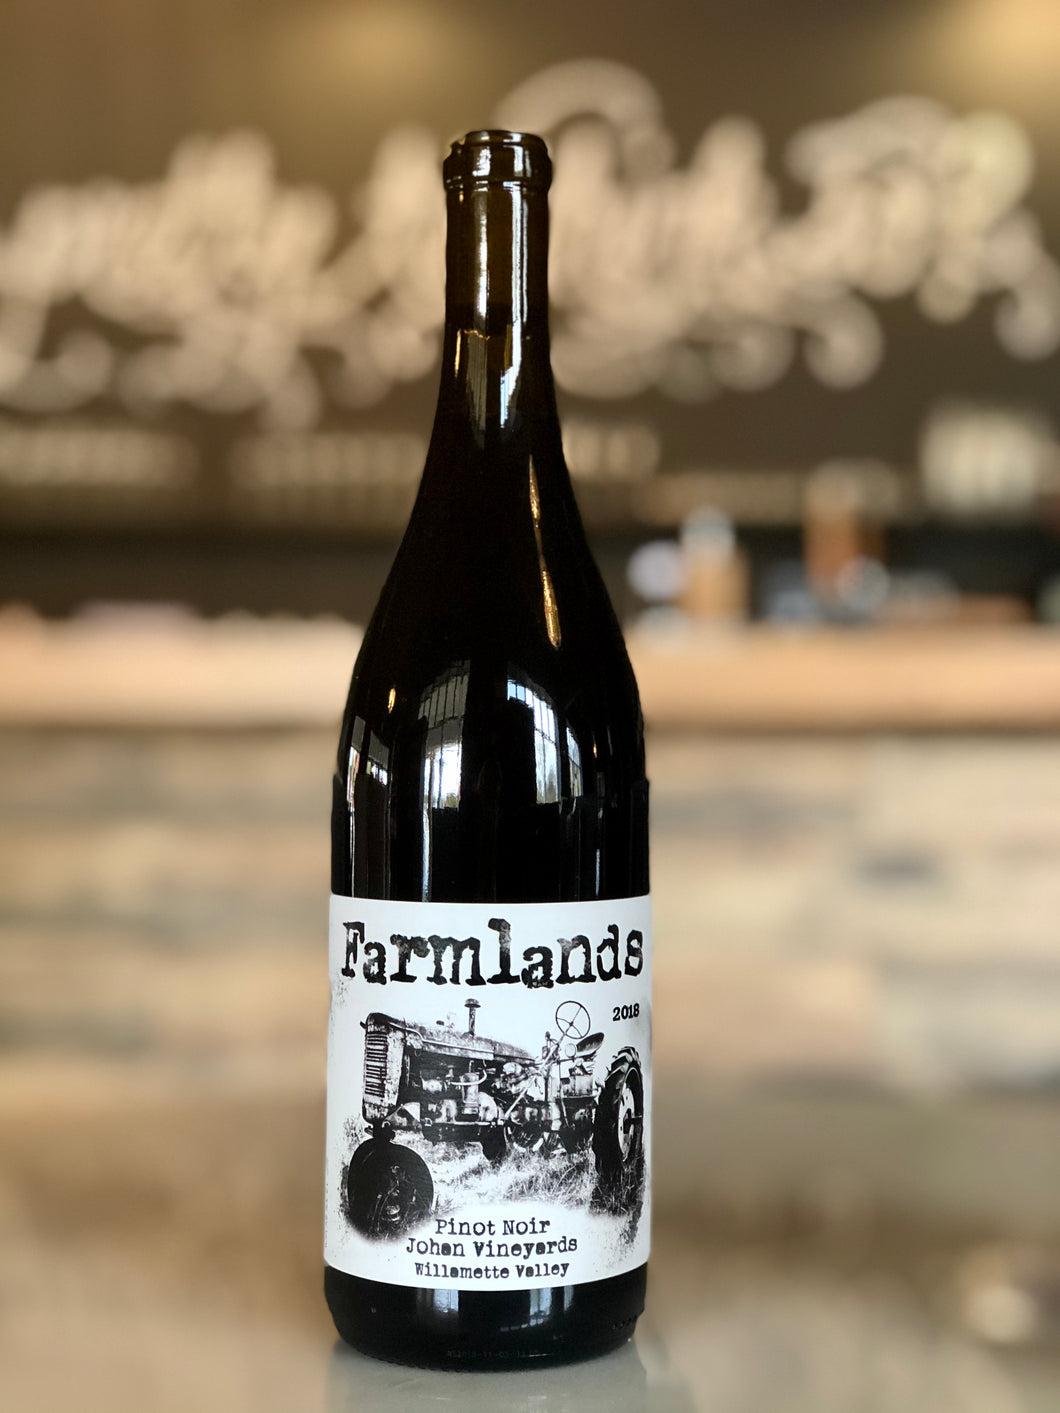 Farmlands Pinot Noir 2017